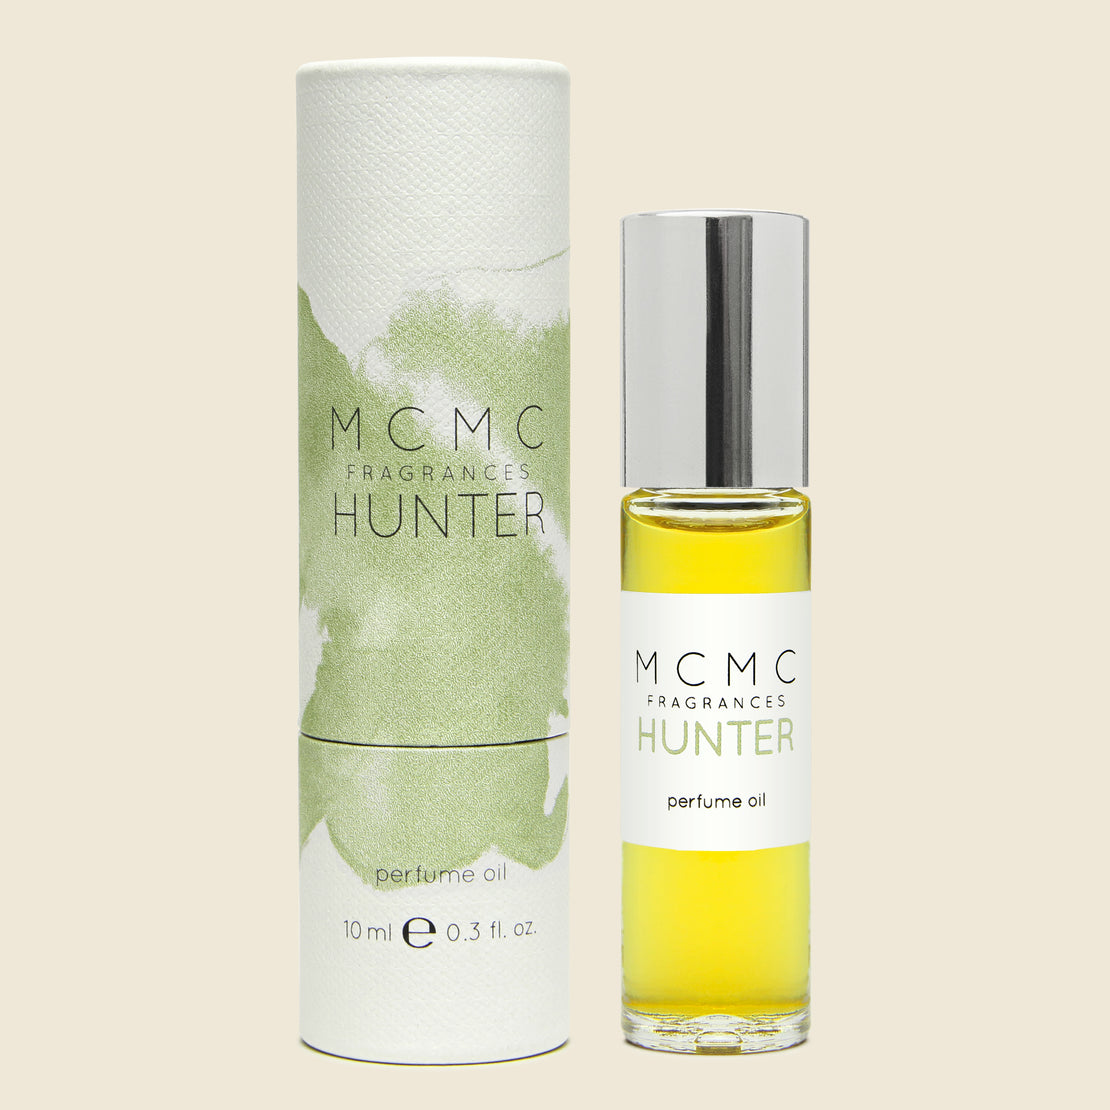 MCMC Fragrances Perfume Oil - HUNTER, 9ml